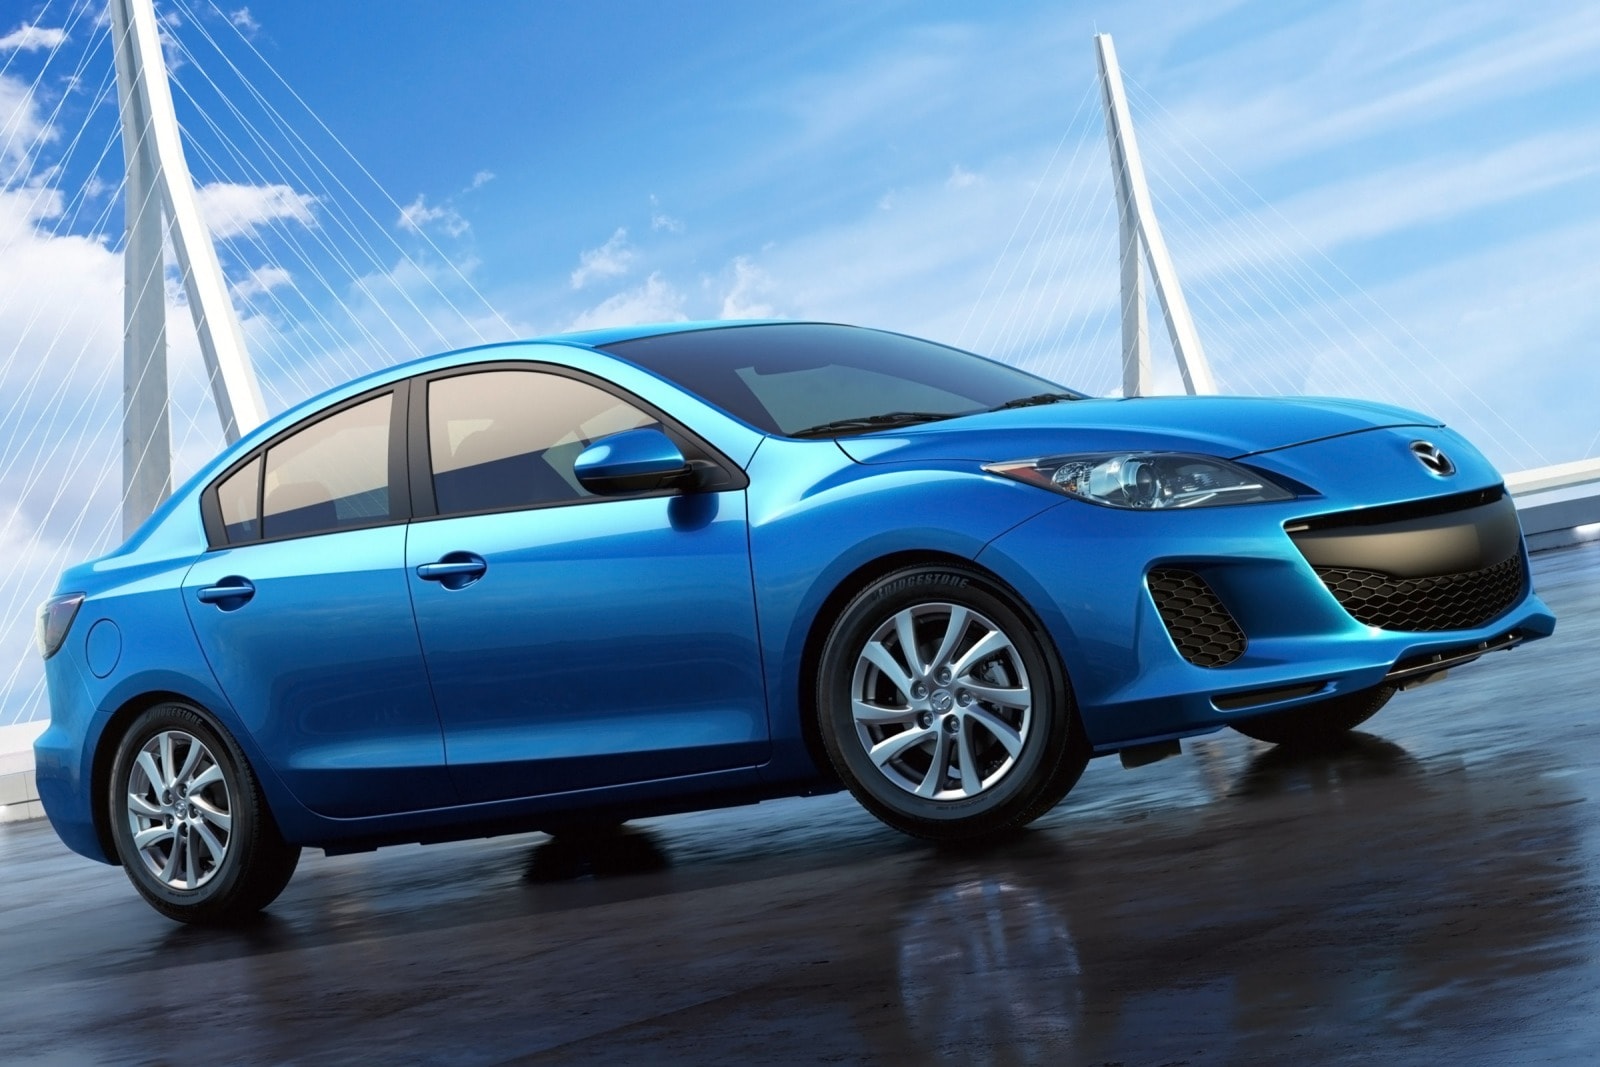 Used 2013 Mazda 3 Sedan Review | Edmunds